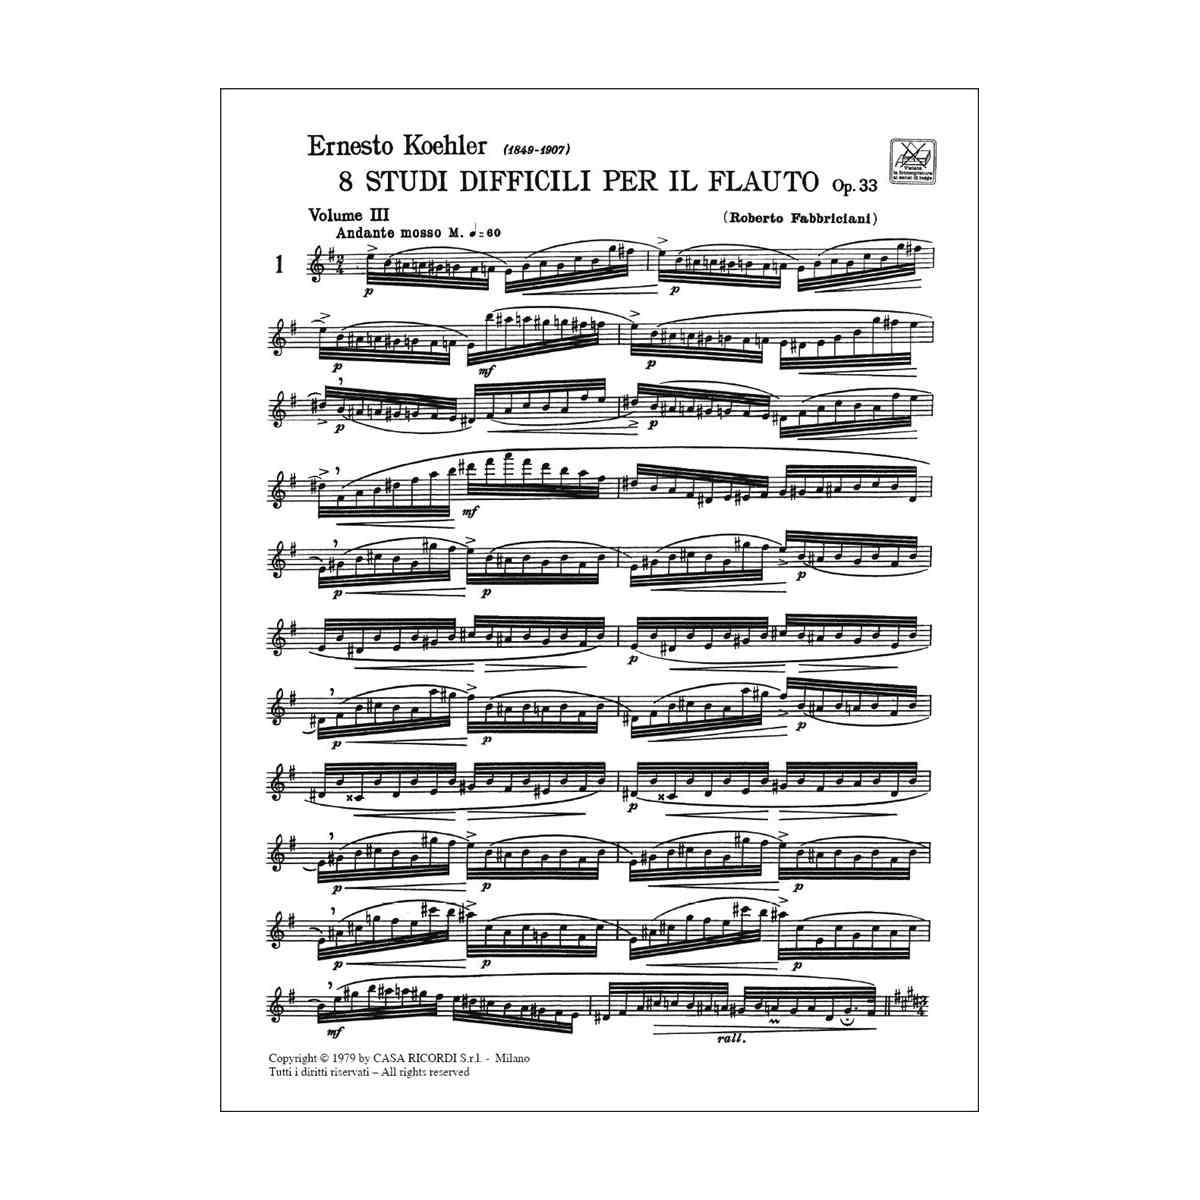 Kohler 8 studi difficili per flauto, op.33